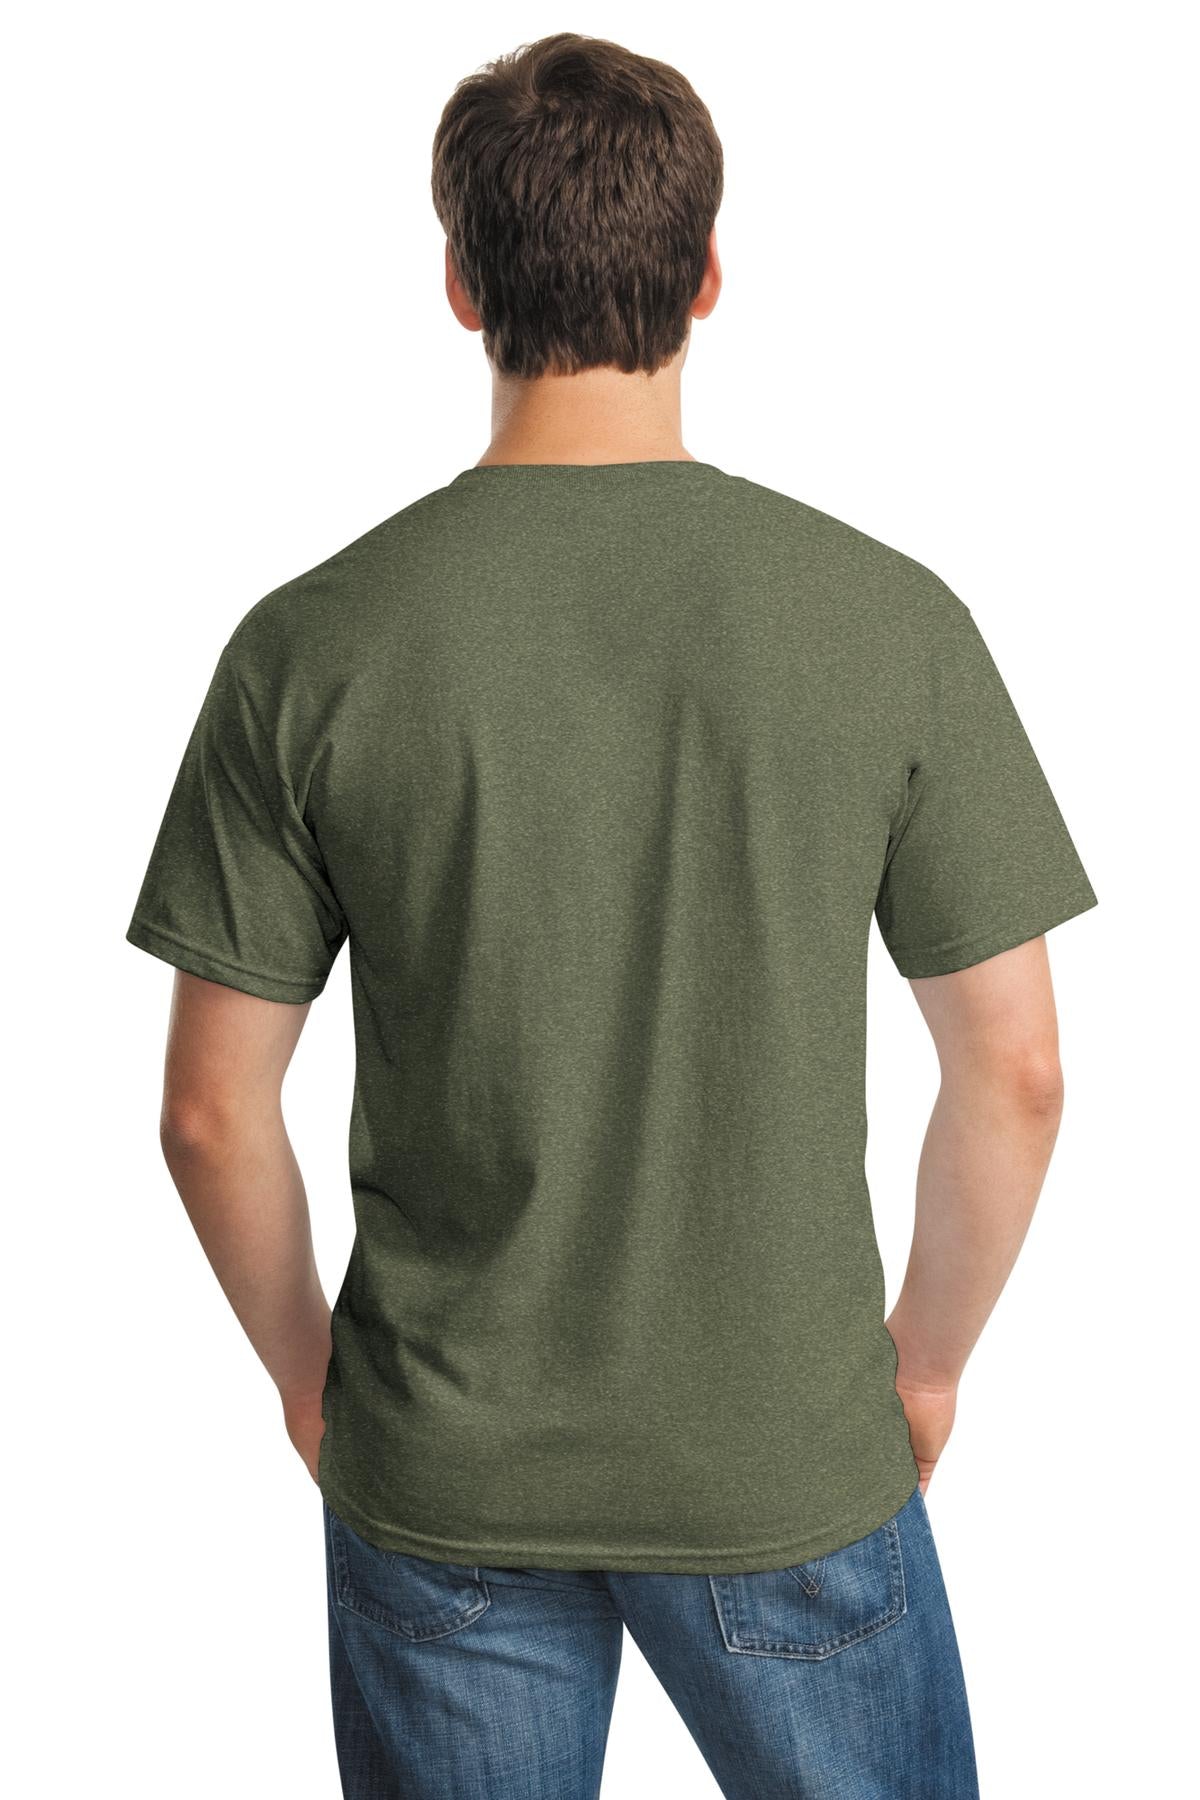 Gildan - Heavy Cotton 100% Cotton T-Shirt. 5000 - Heather Military Green